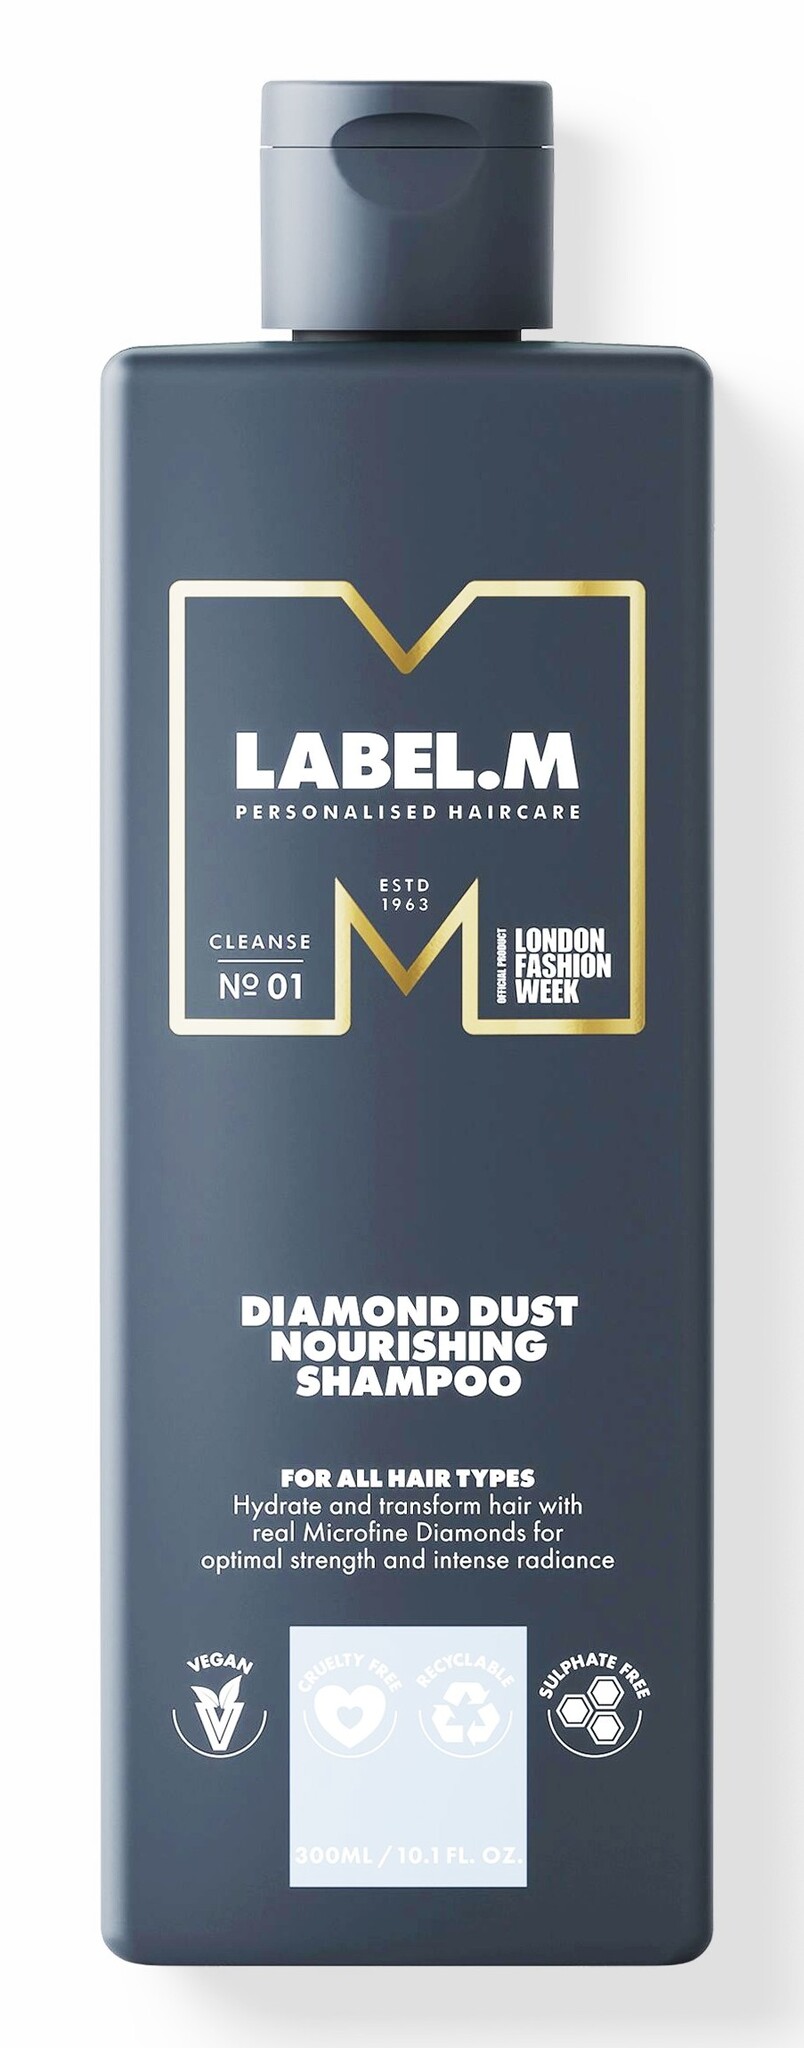 Label.m Diamond Dust Nourishing Shampoo 300ml